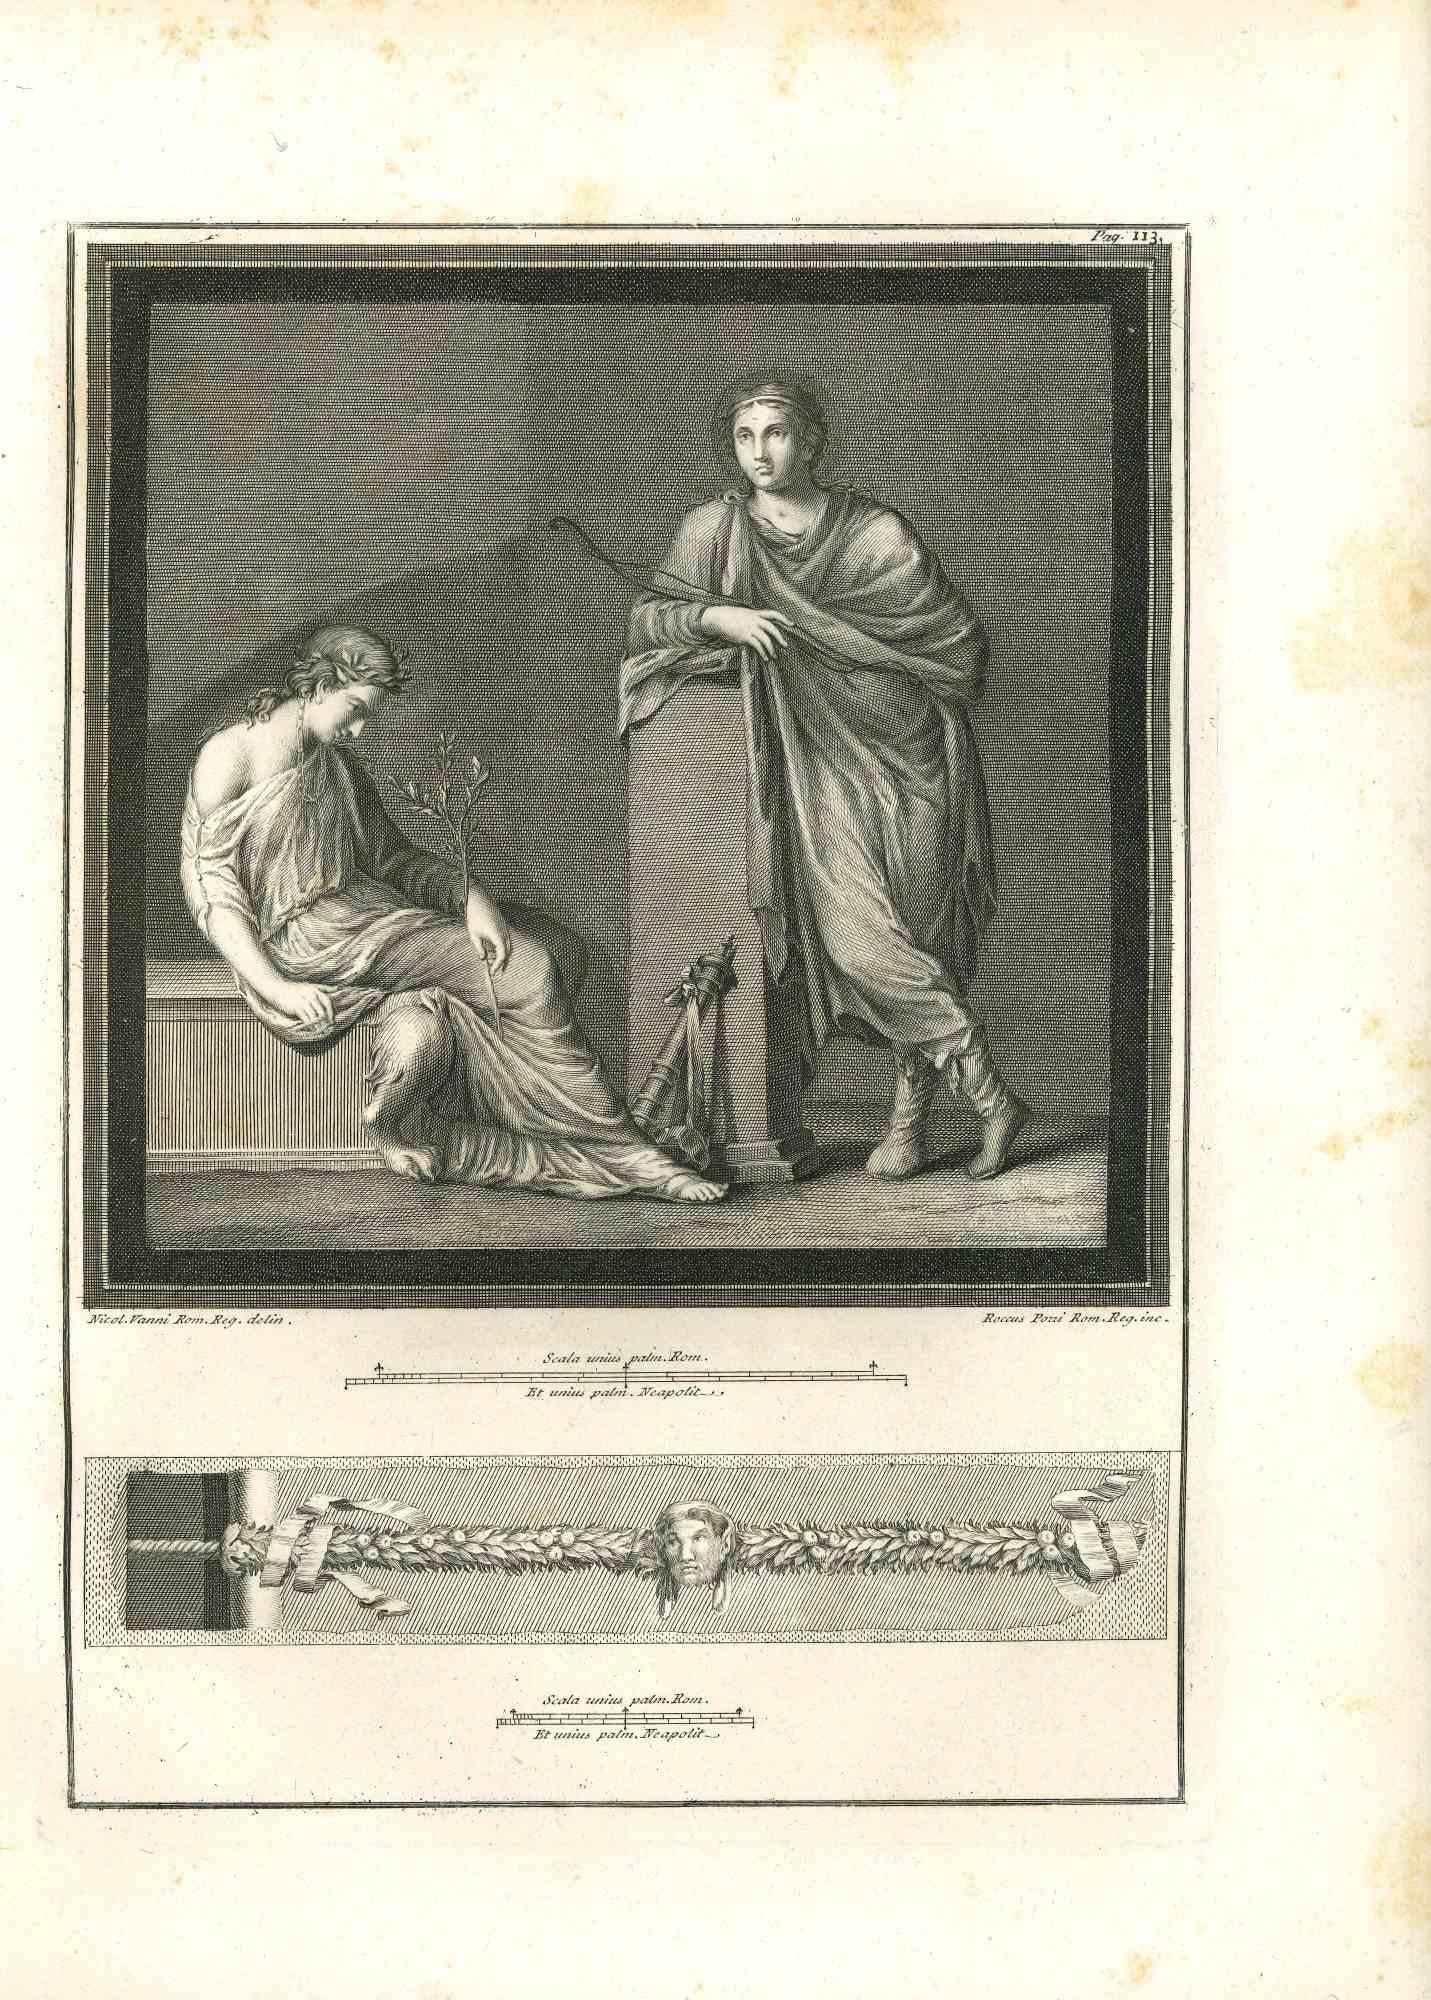 Roccus Pozzi, Nicola Vanni Figurative Print - Ancient Roman Painting - Original Etching by R. Pozzi, N. Vanni - 18th Century